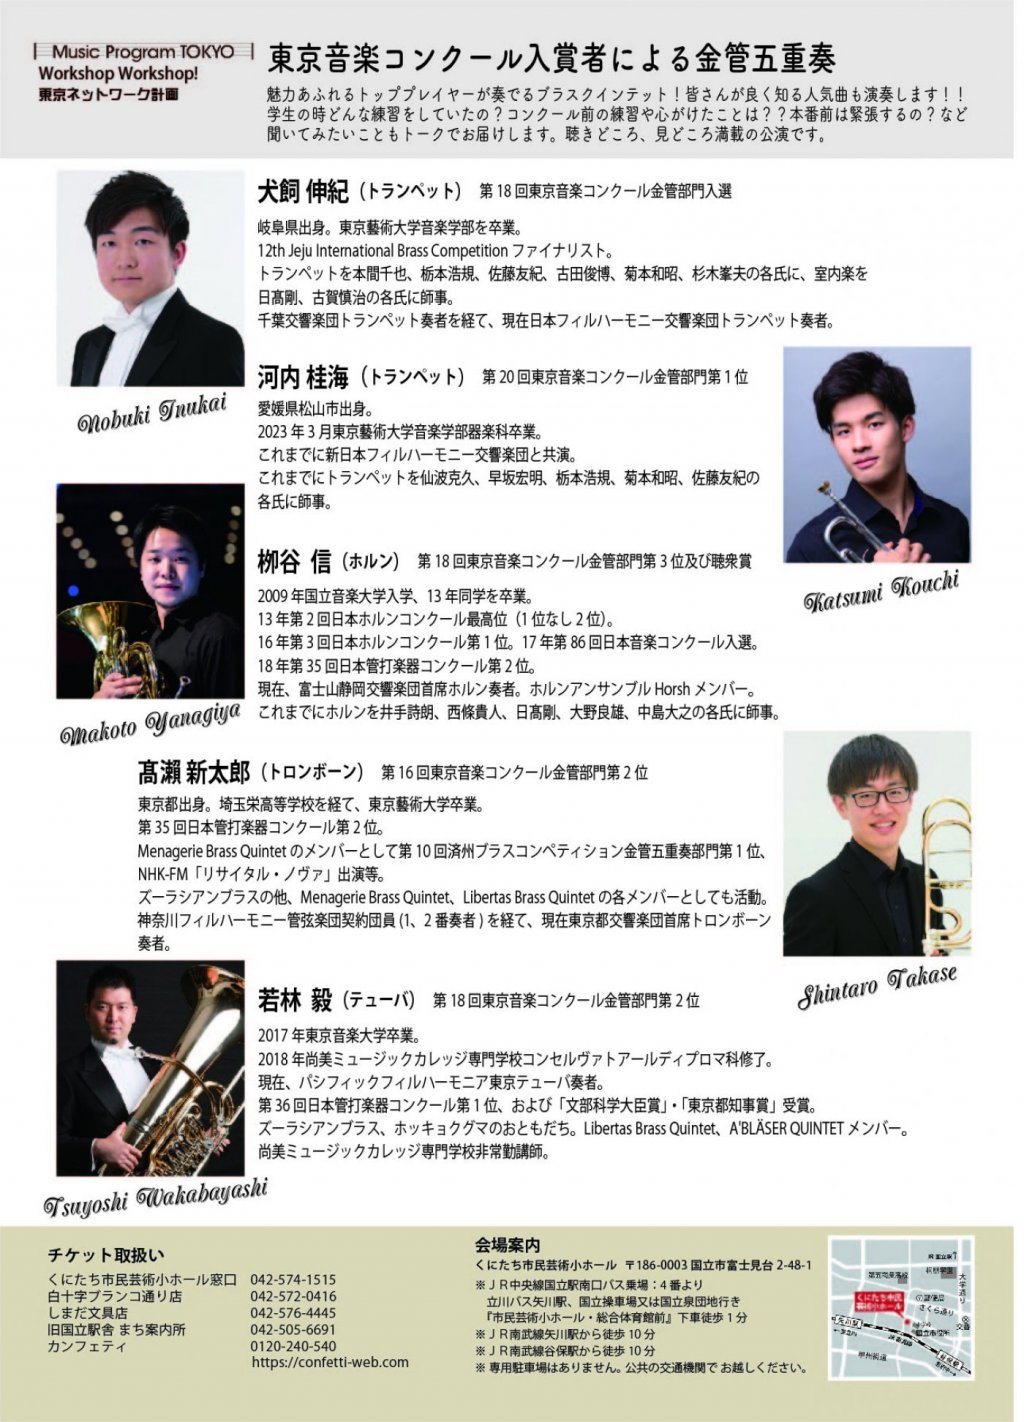 Music　Program　TOKYO　Workshop　Workshop　東京ネットワーク計画　東京音楽コンクール入賞者による金管五重奏